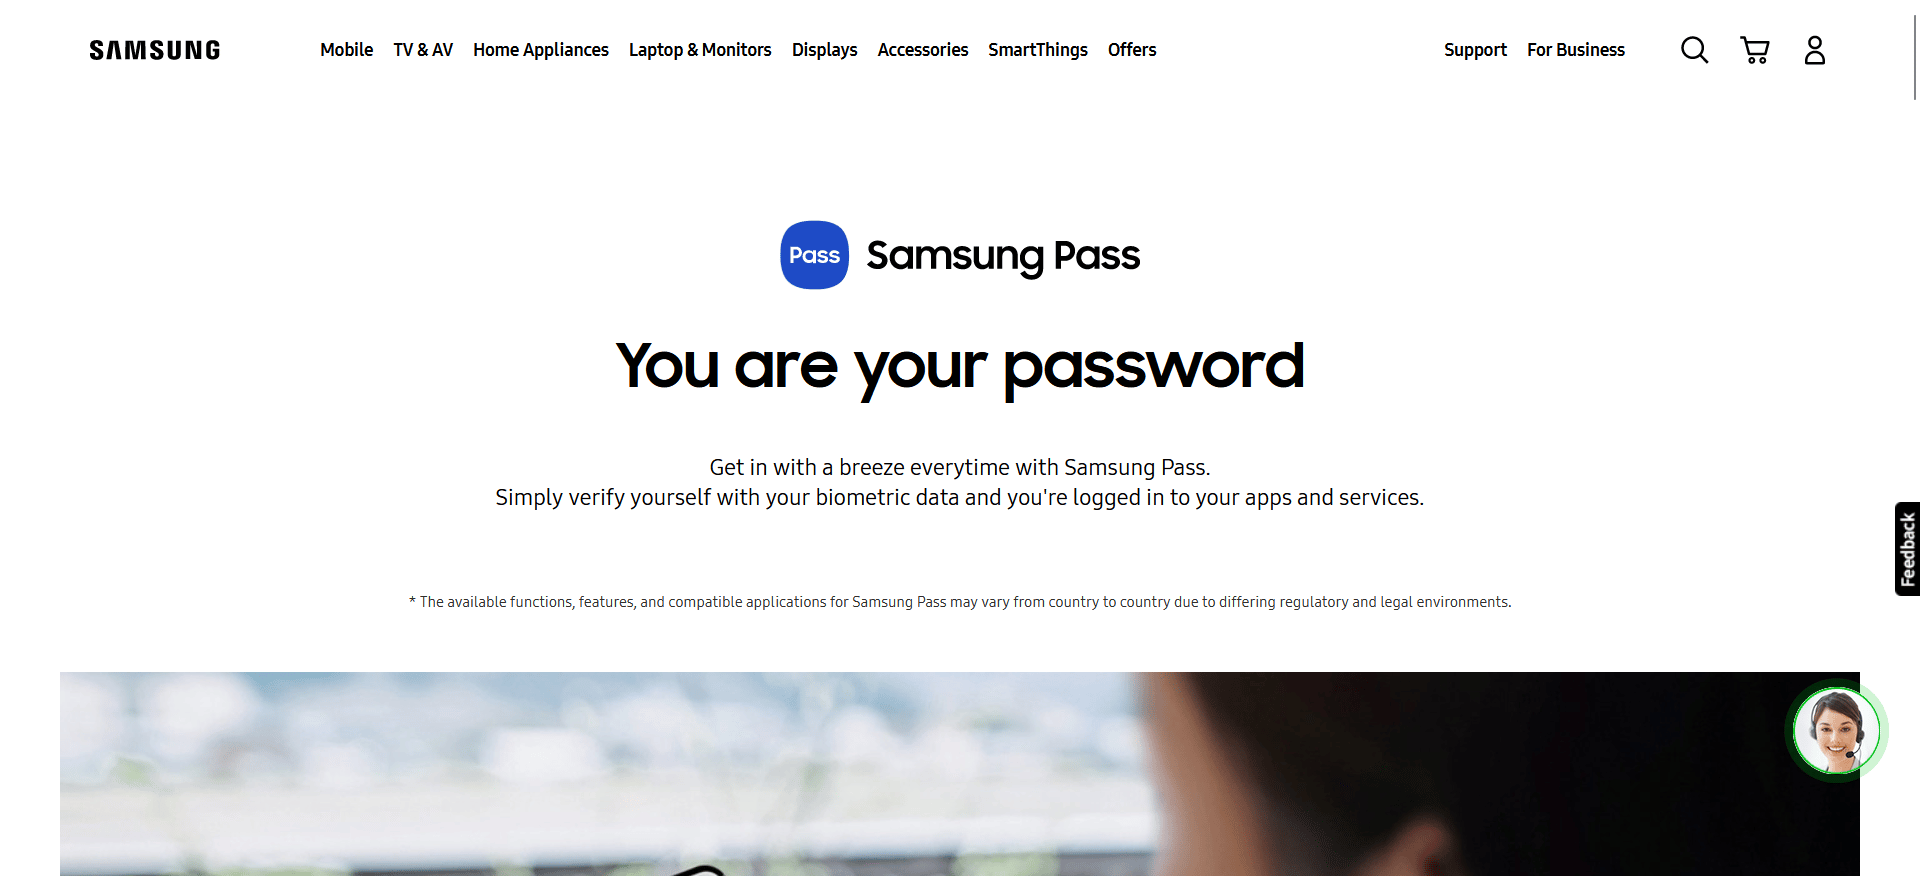 Samsung Pass webbplats